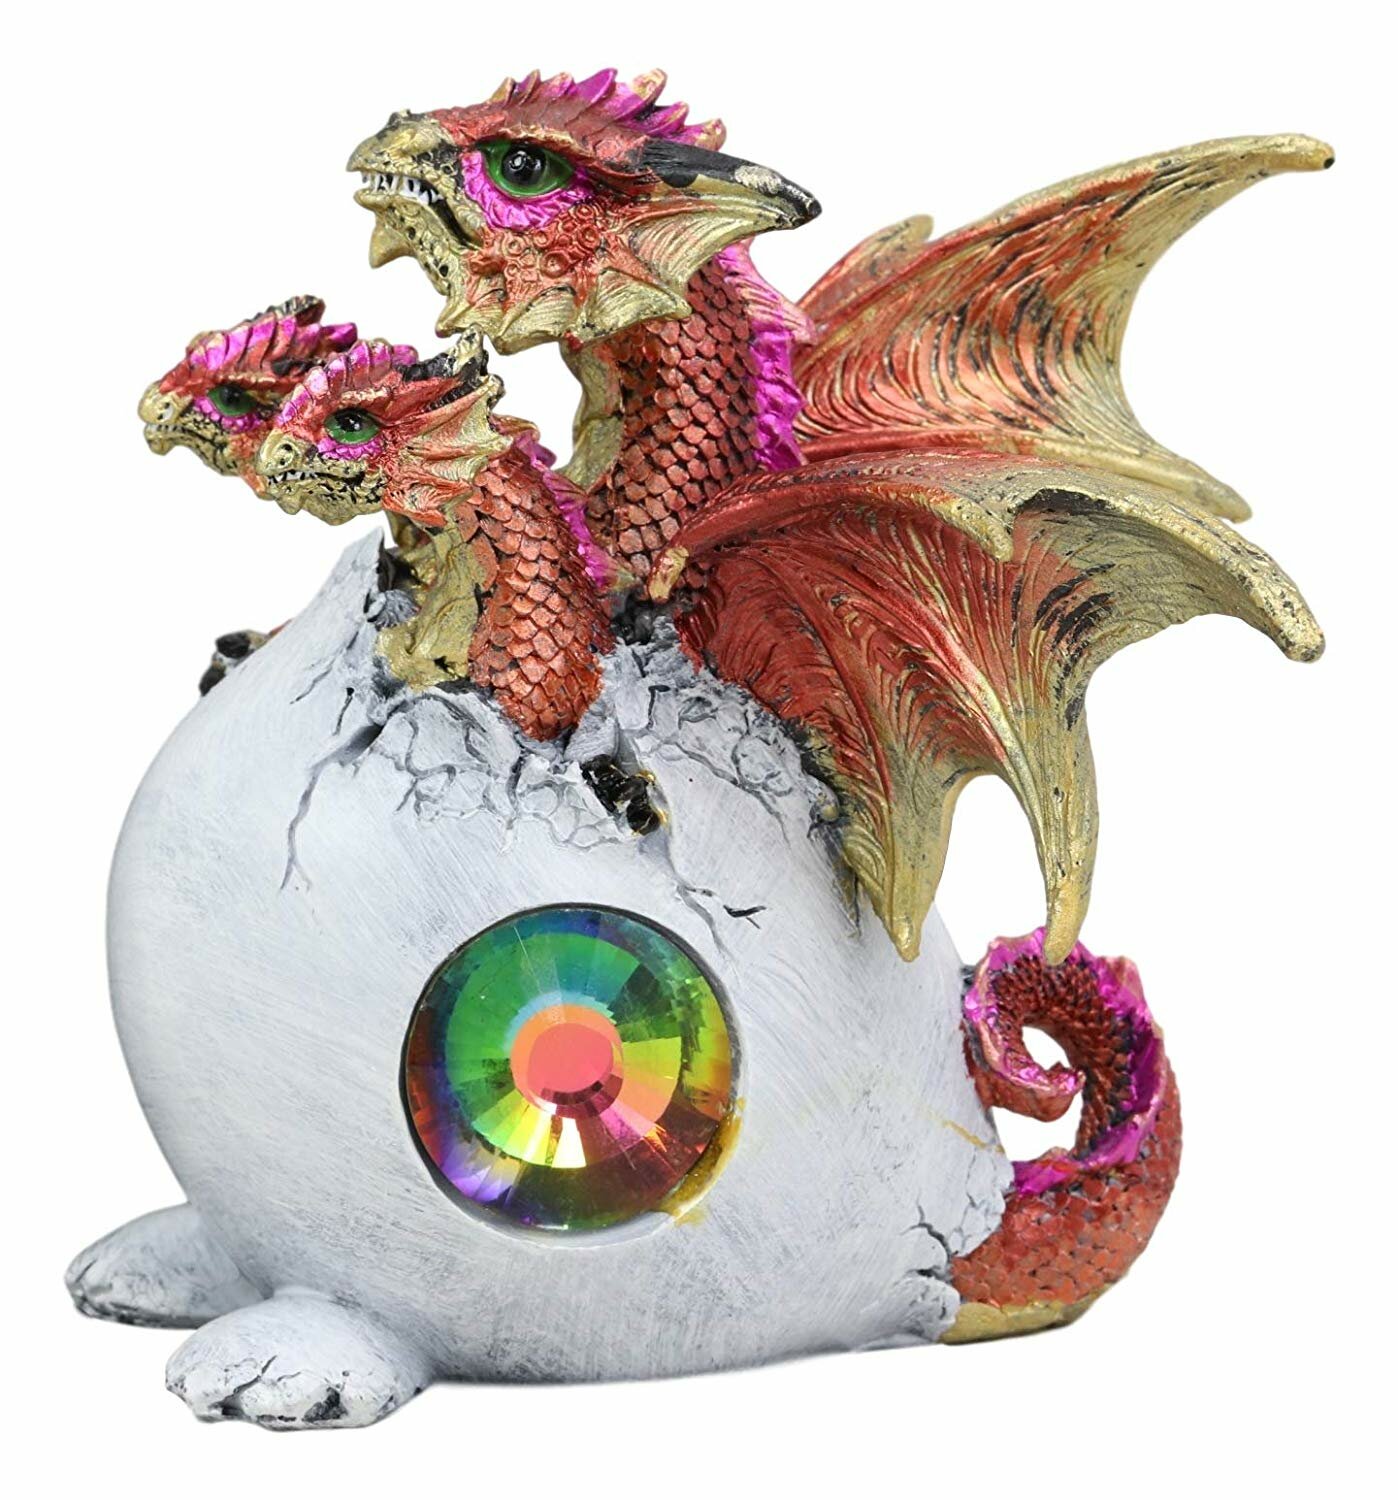 3 headed dragon toy